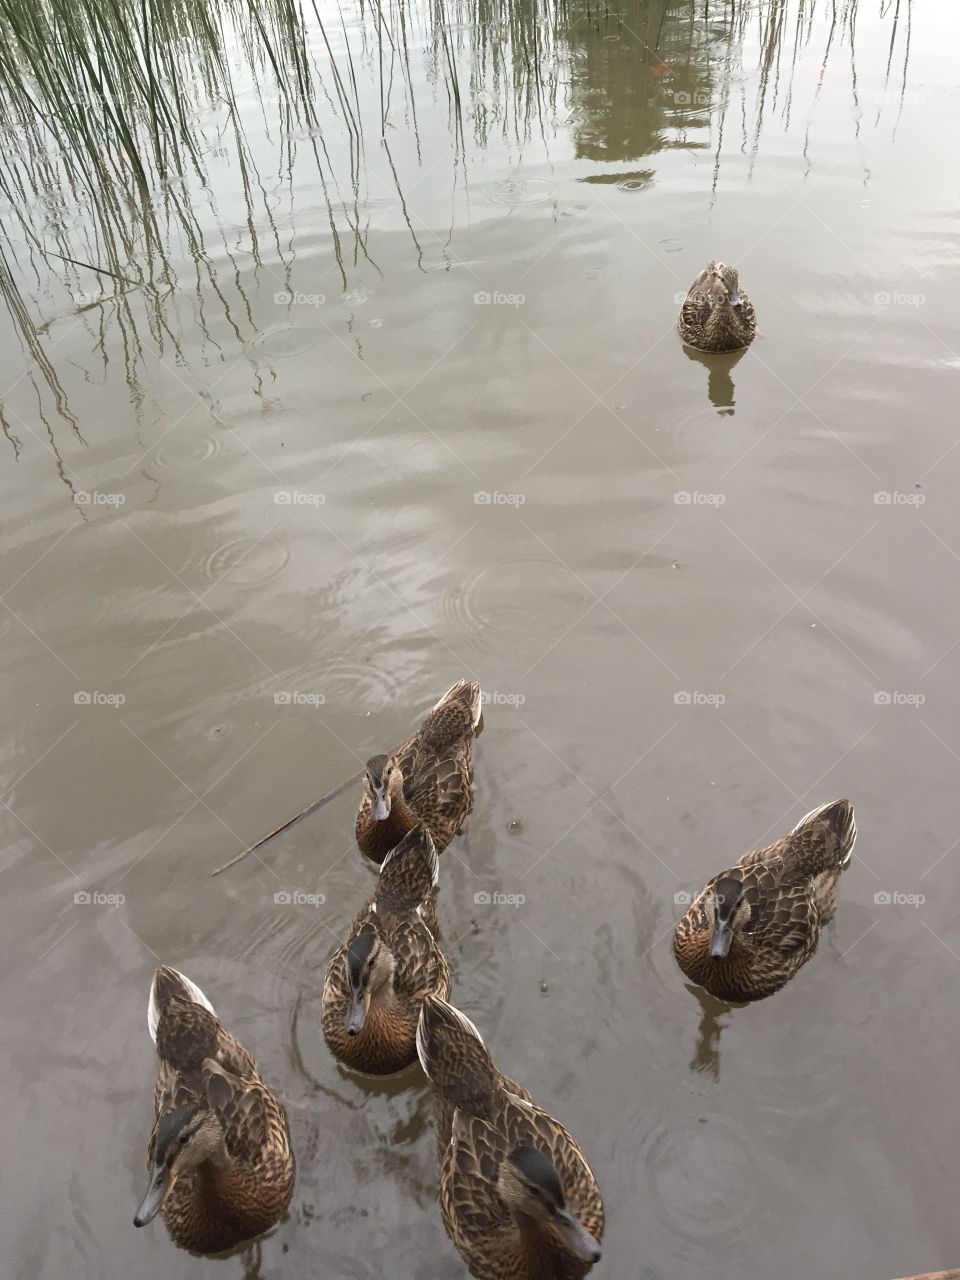 Feeding the ducks. Ducks in a pond